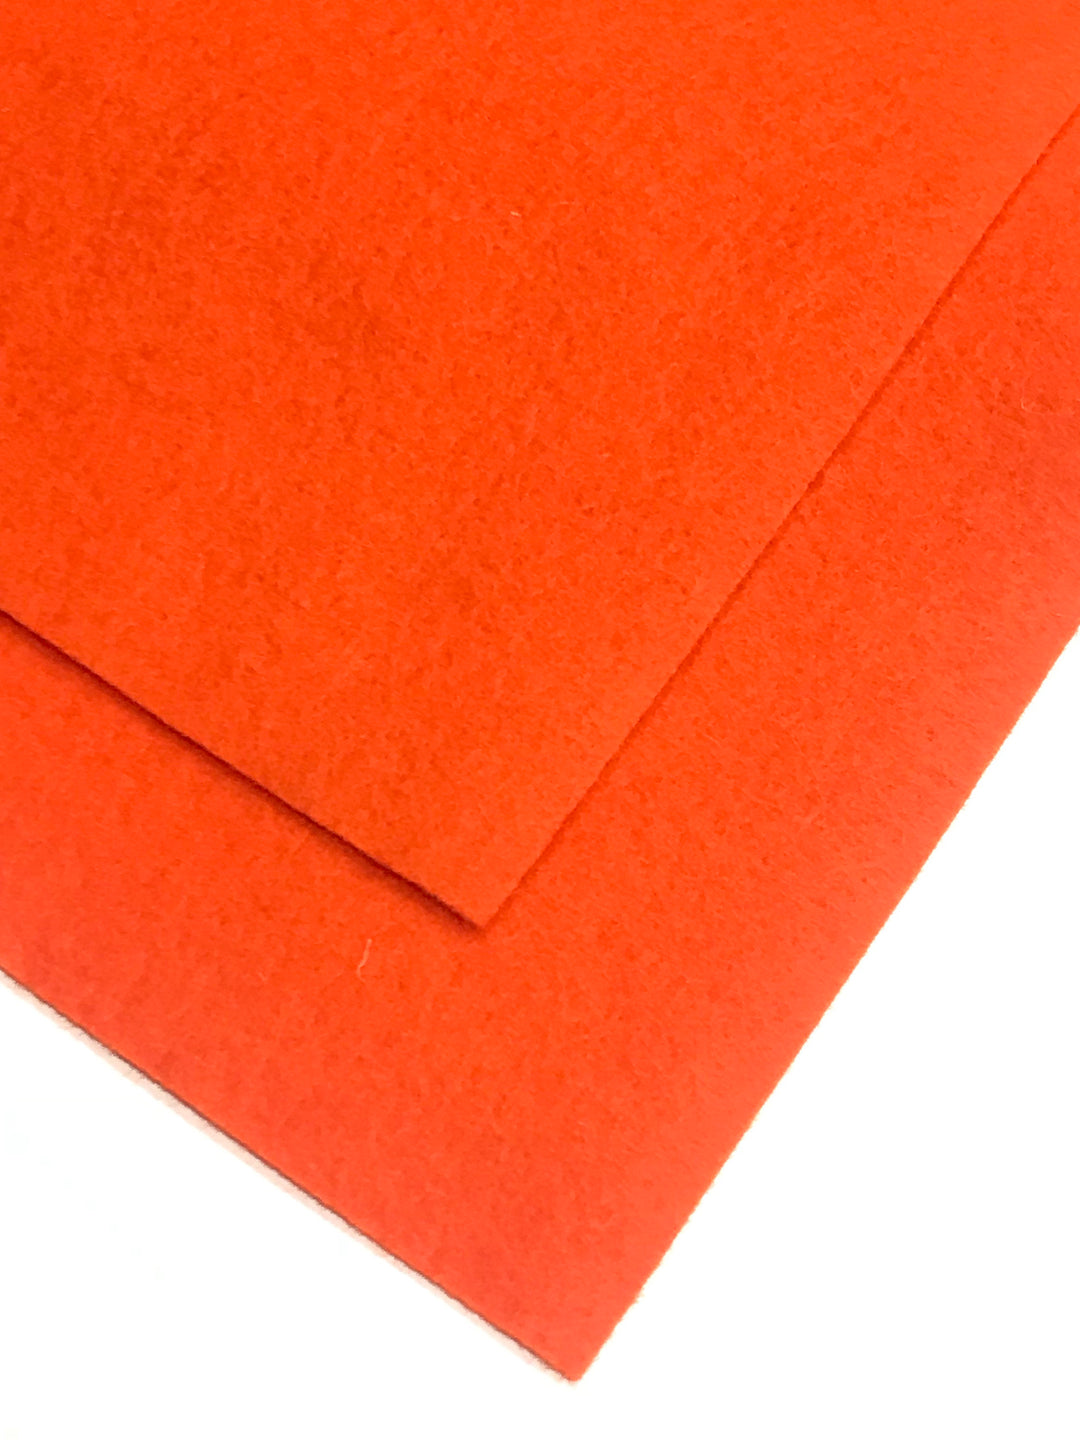 1mm Orange Merino Wool Felt A4 Sheet - No. 5